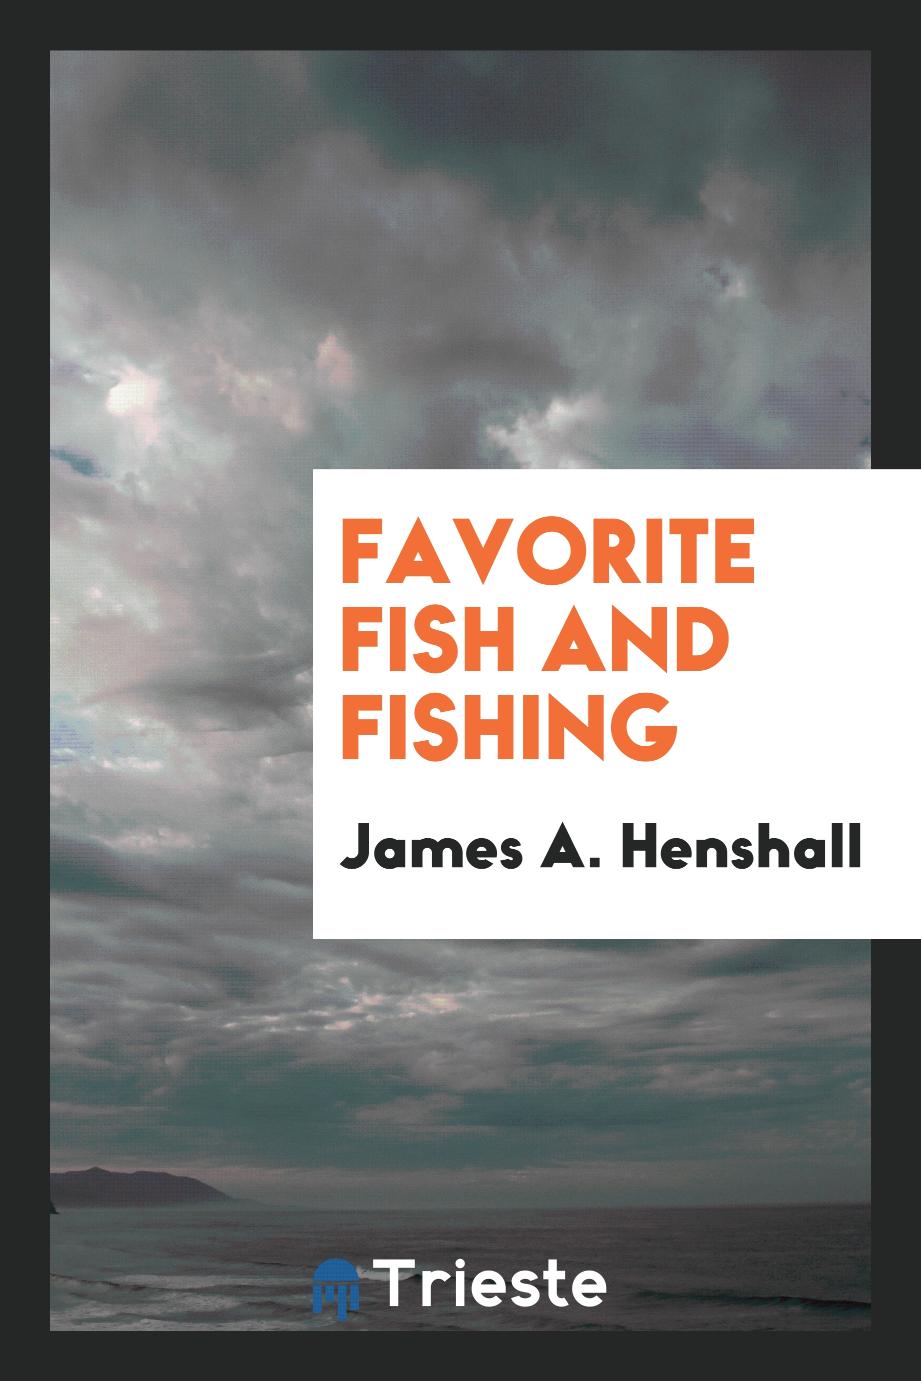 Favorite fish and fishing